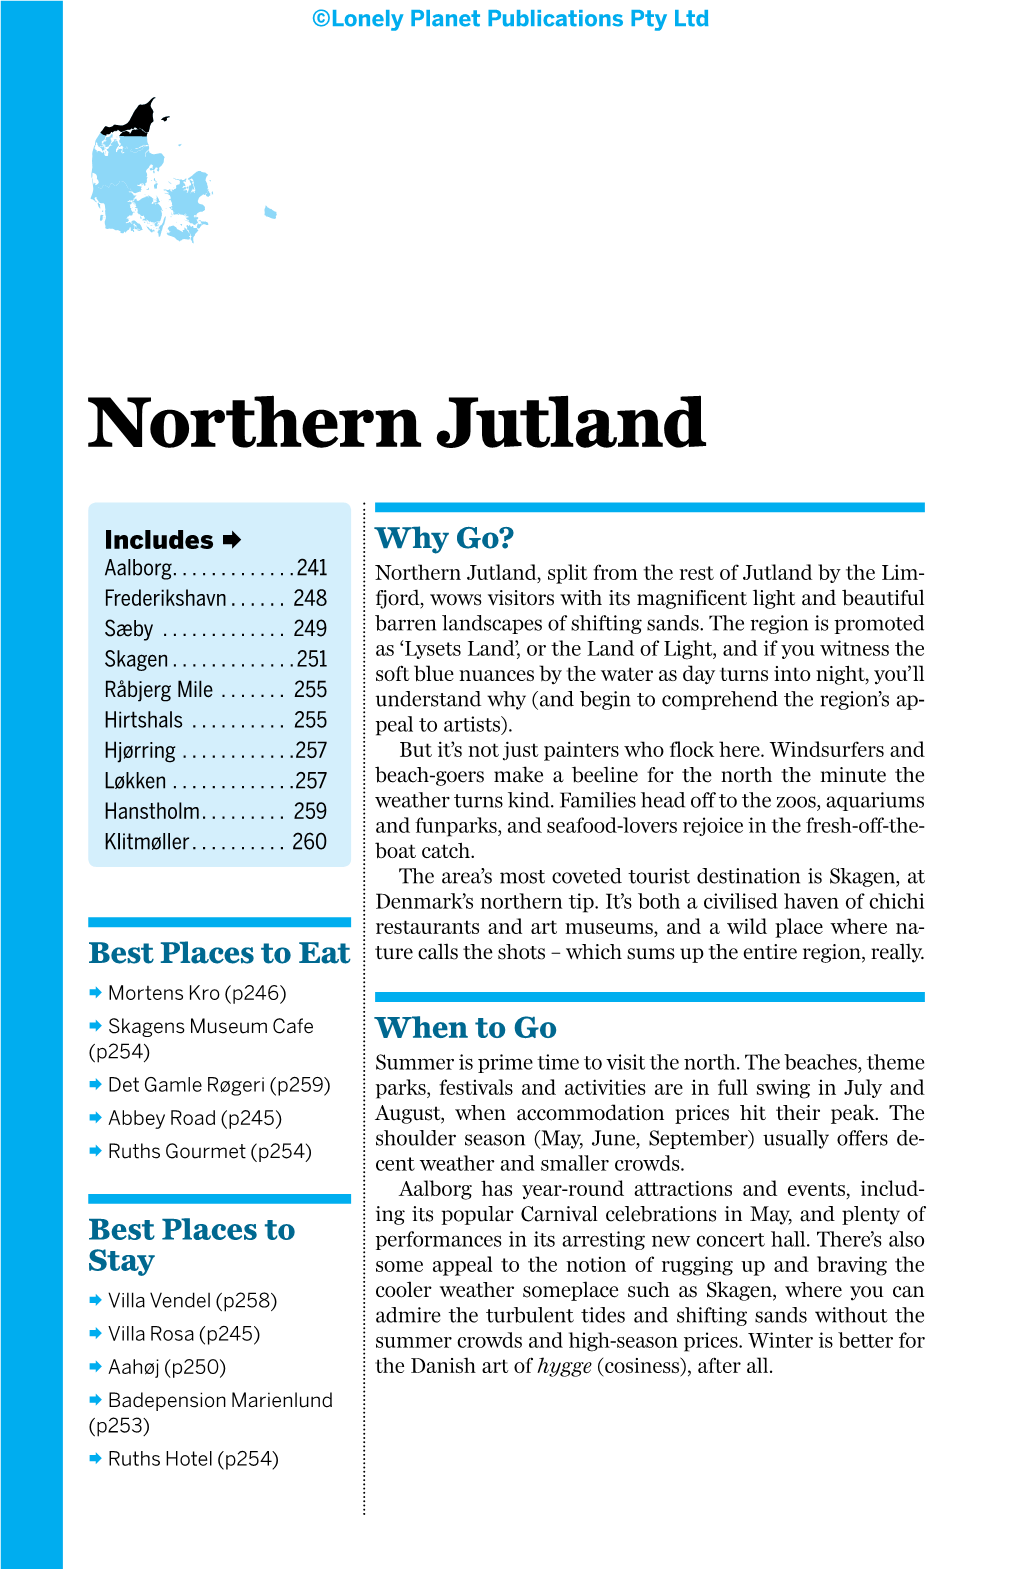 Northern Jutland